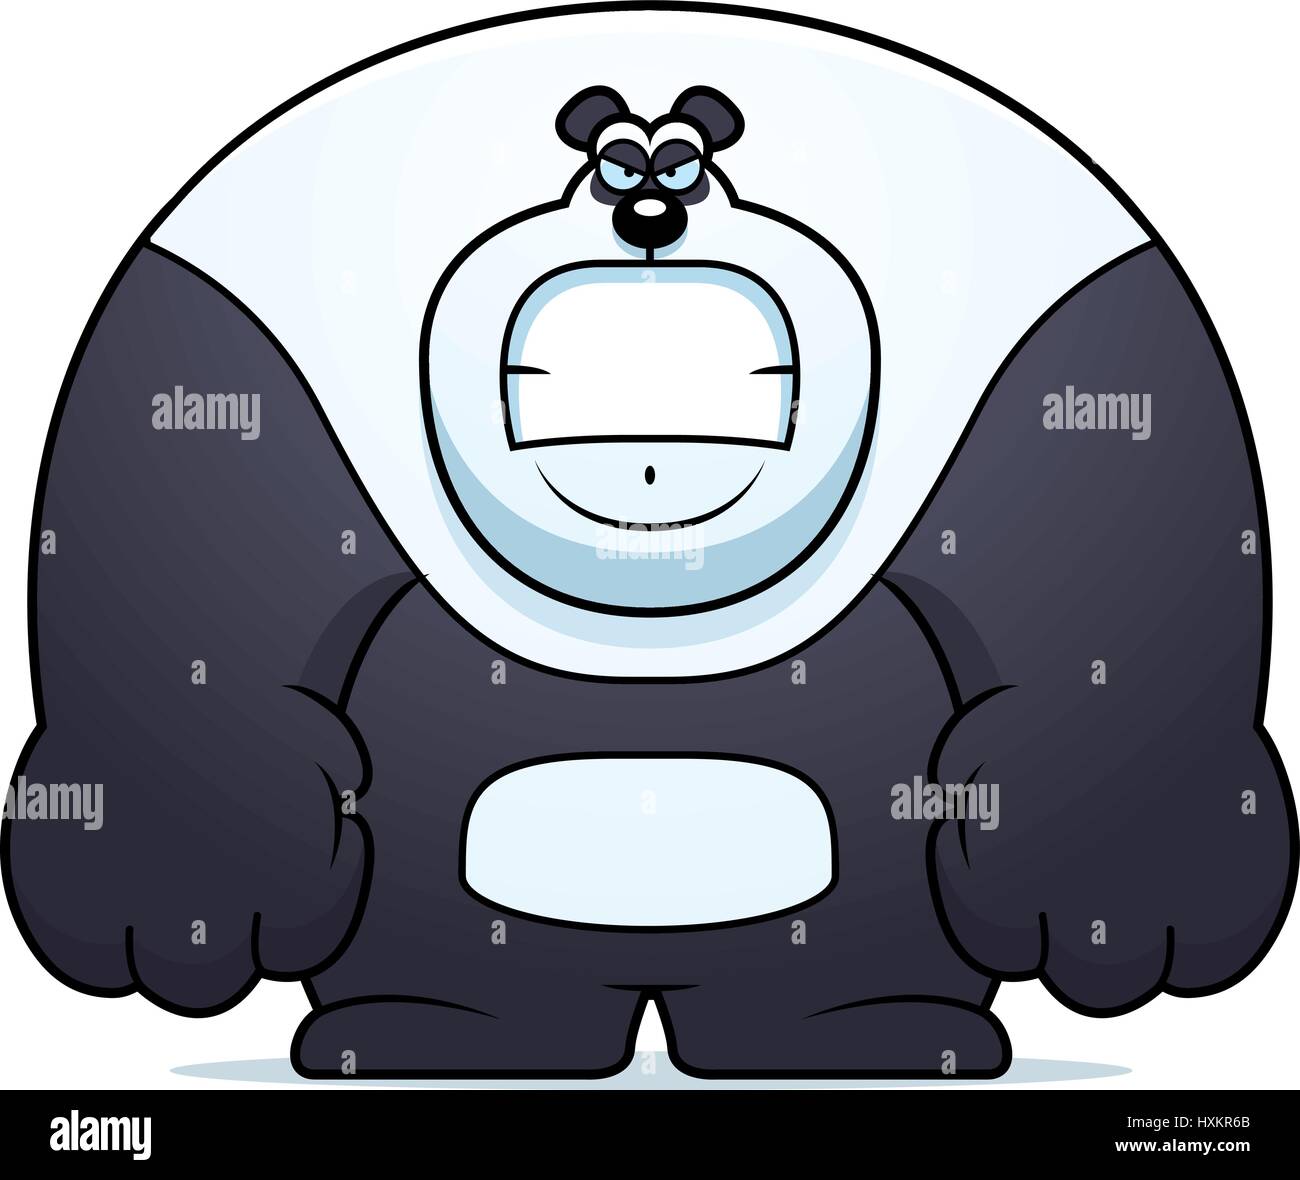 A cartoon illustration of a panda bear looking angry. Stock Vector